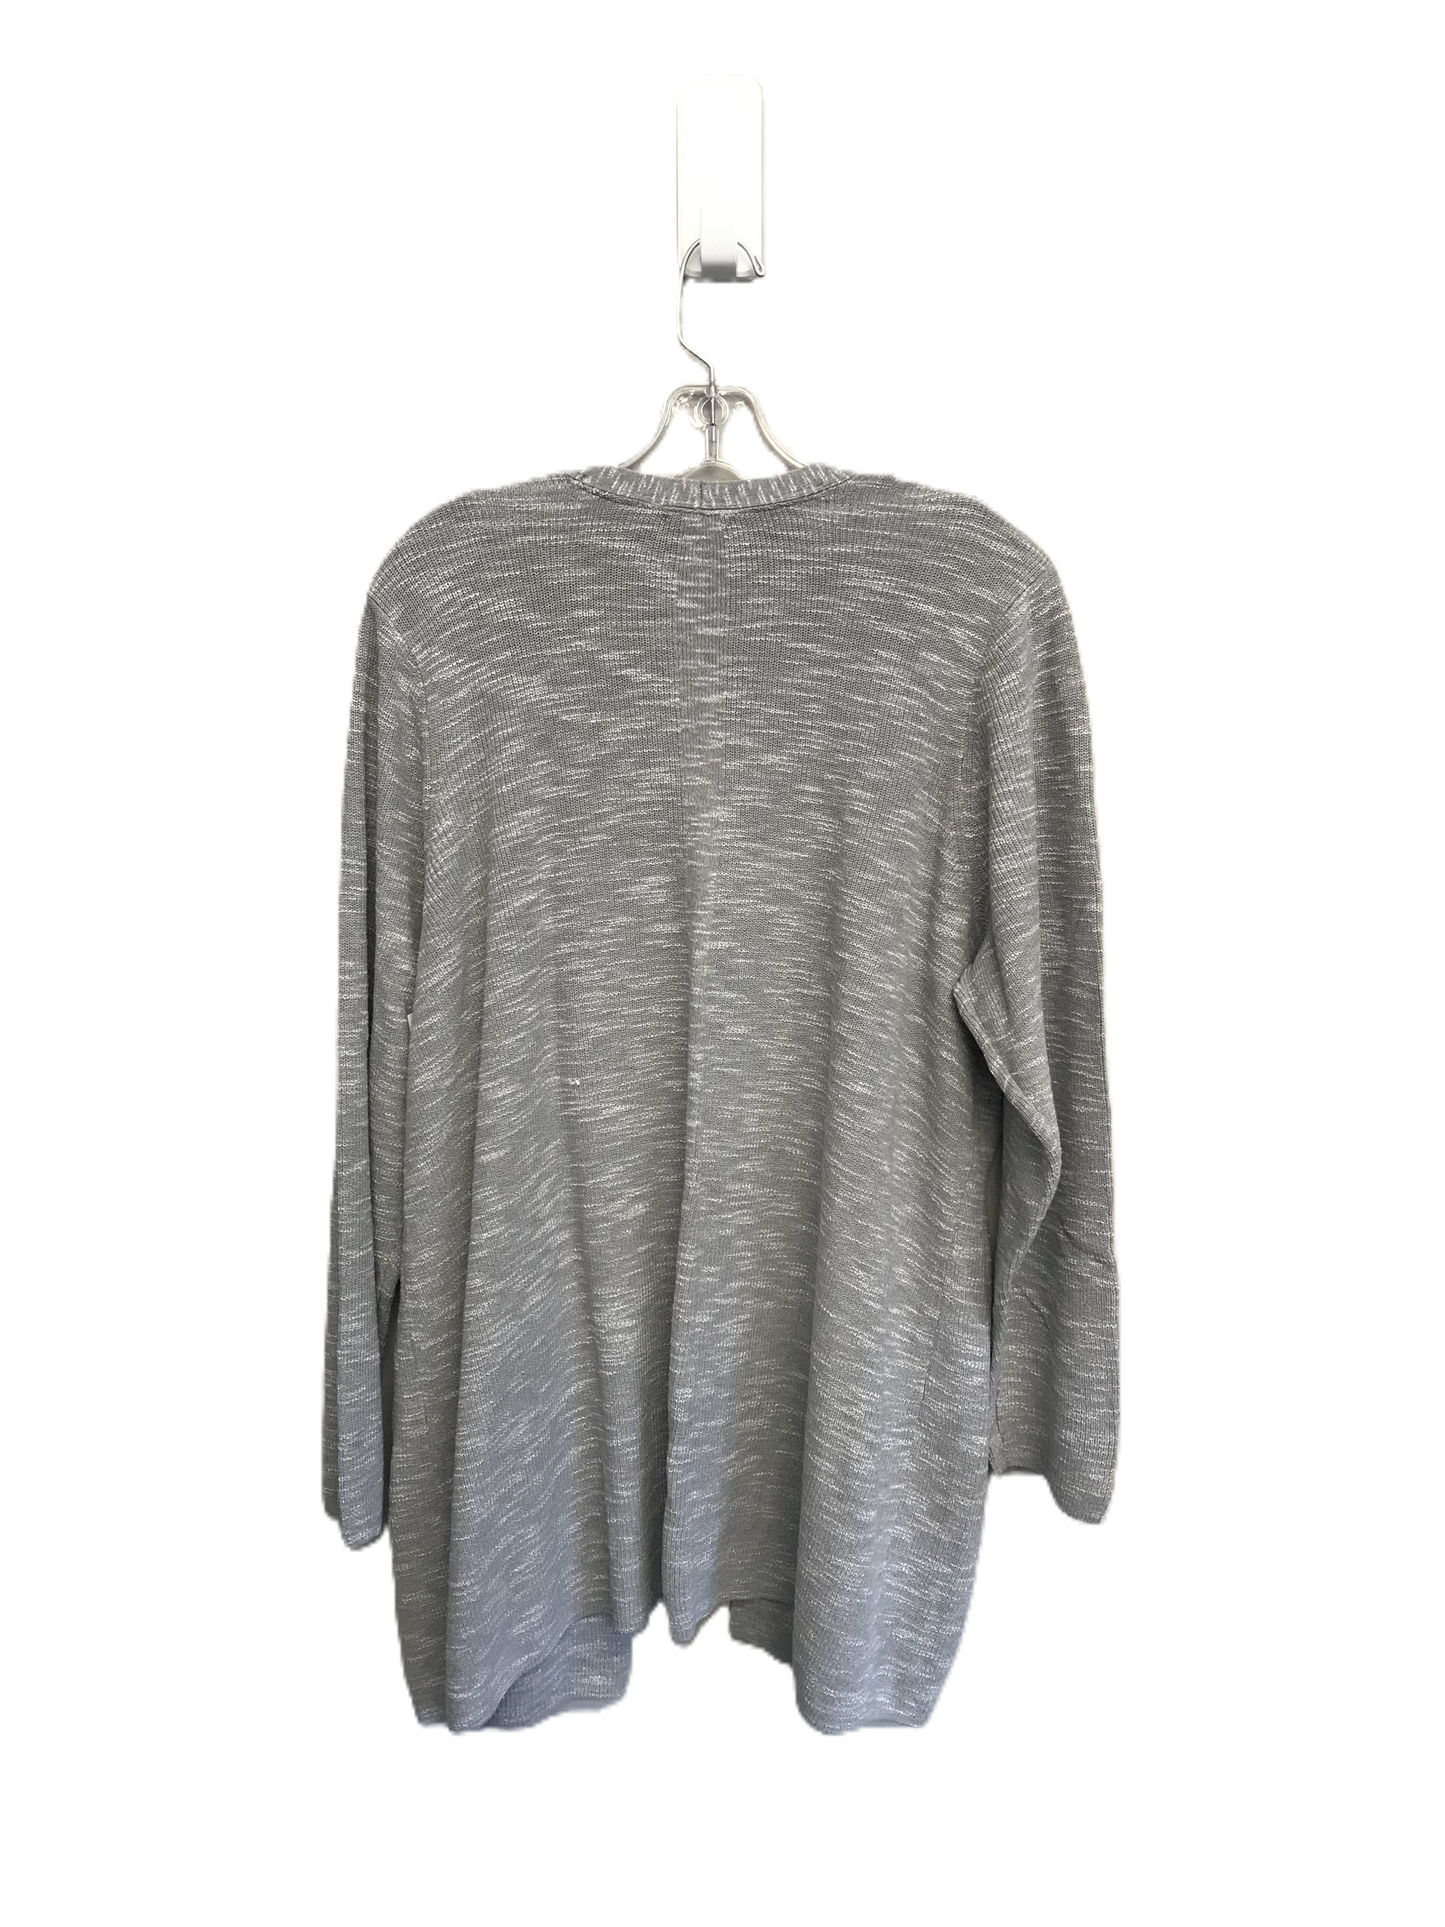 Grey Sweater Cardigan By J. Jill, Size: 2x